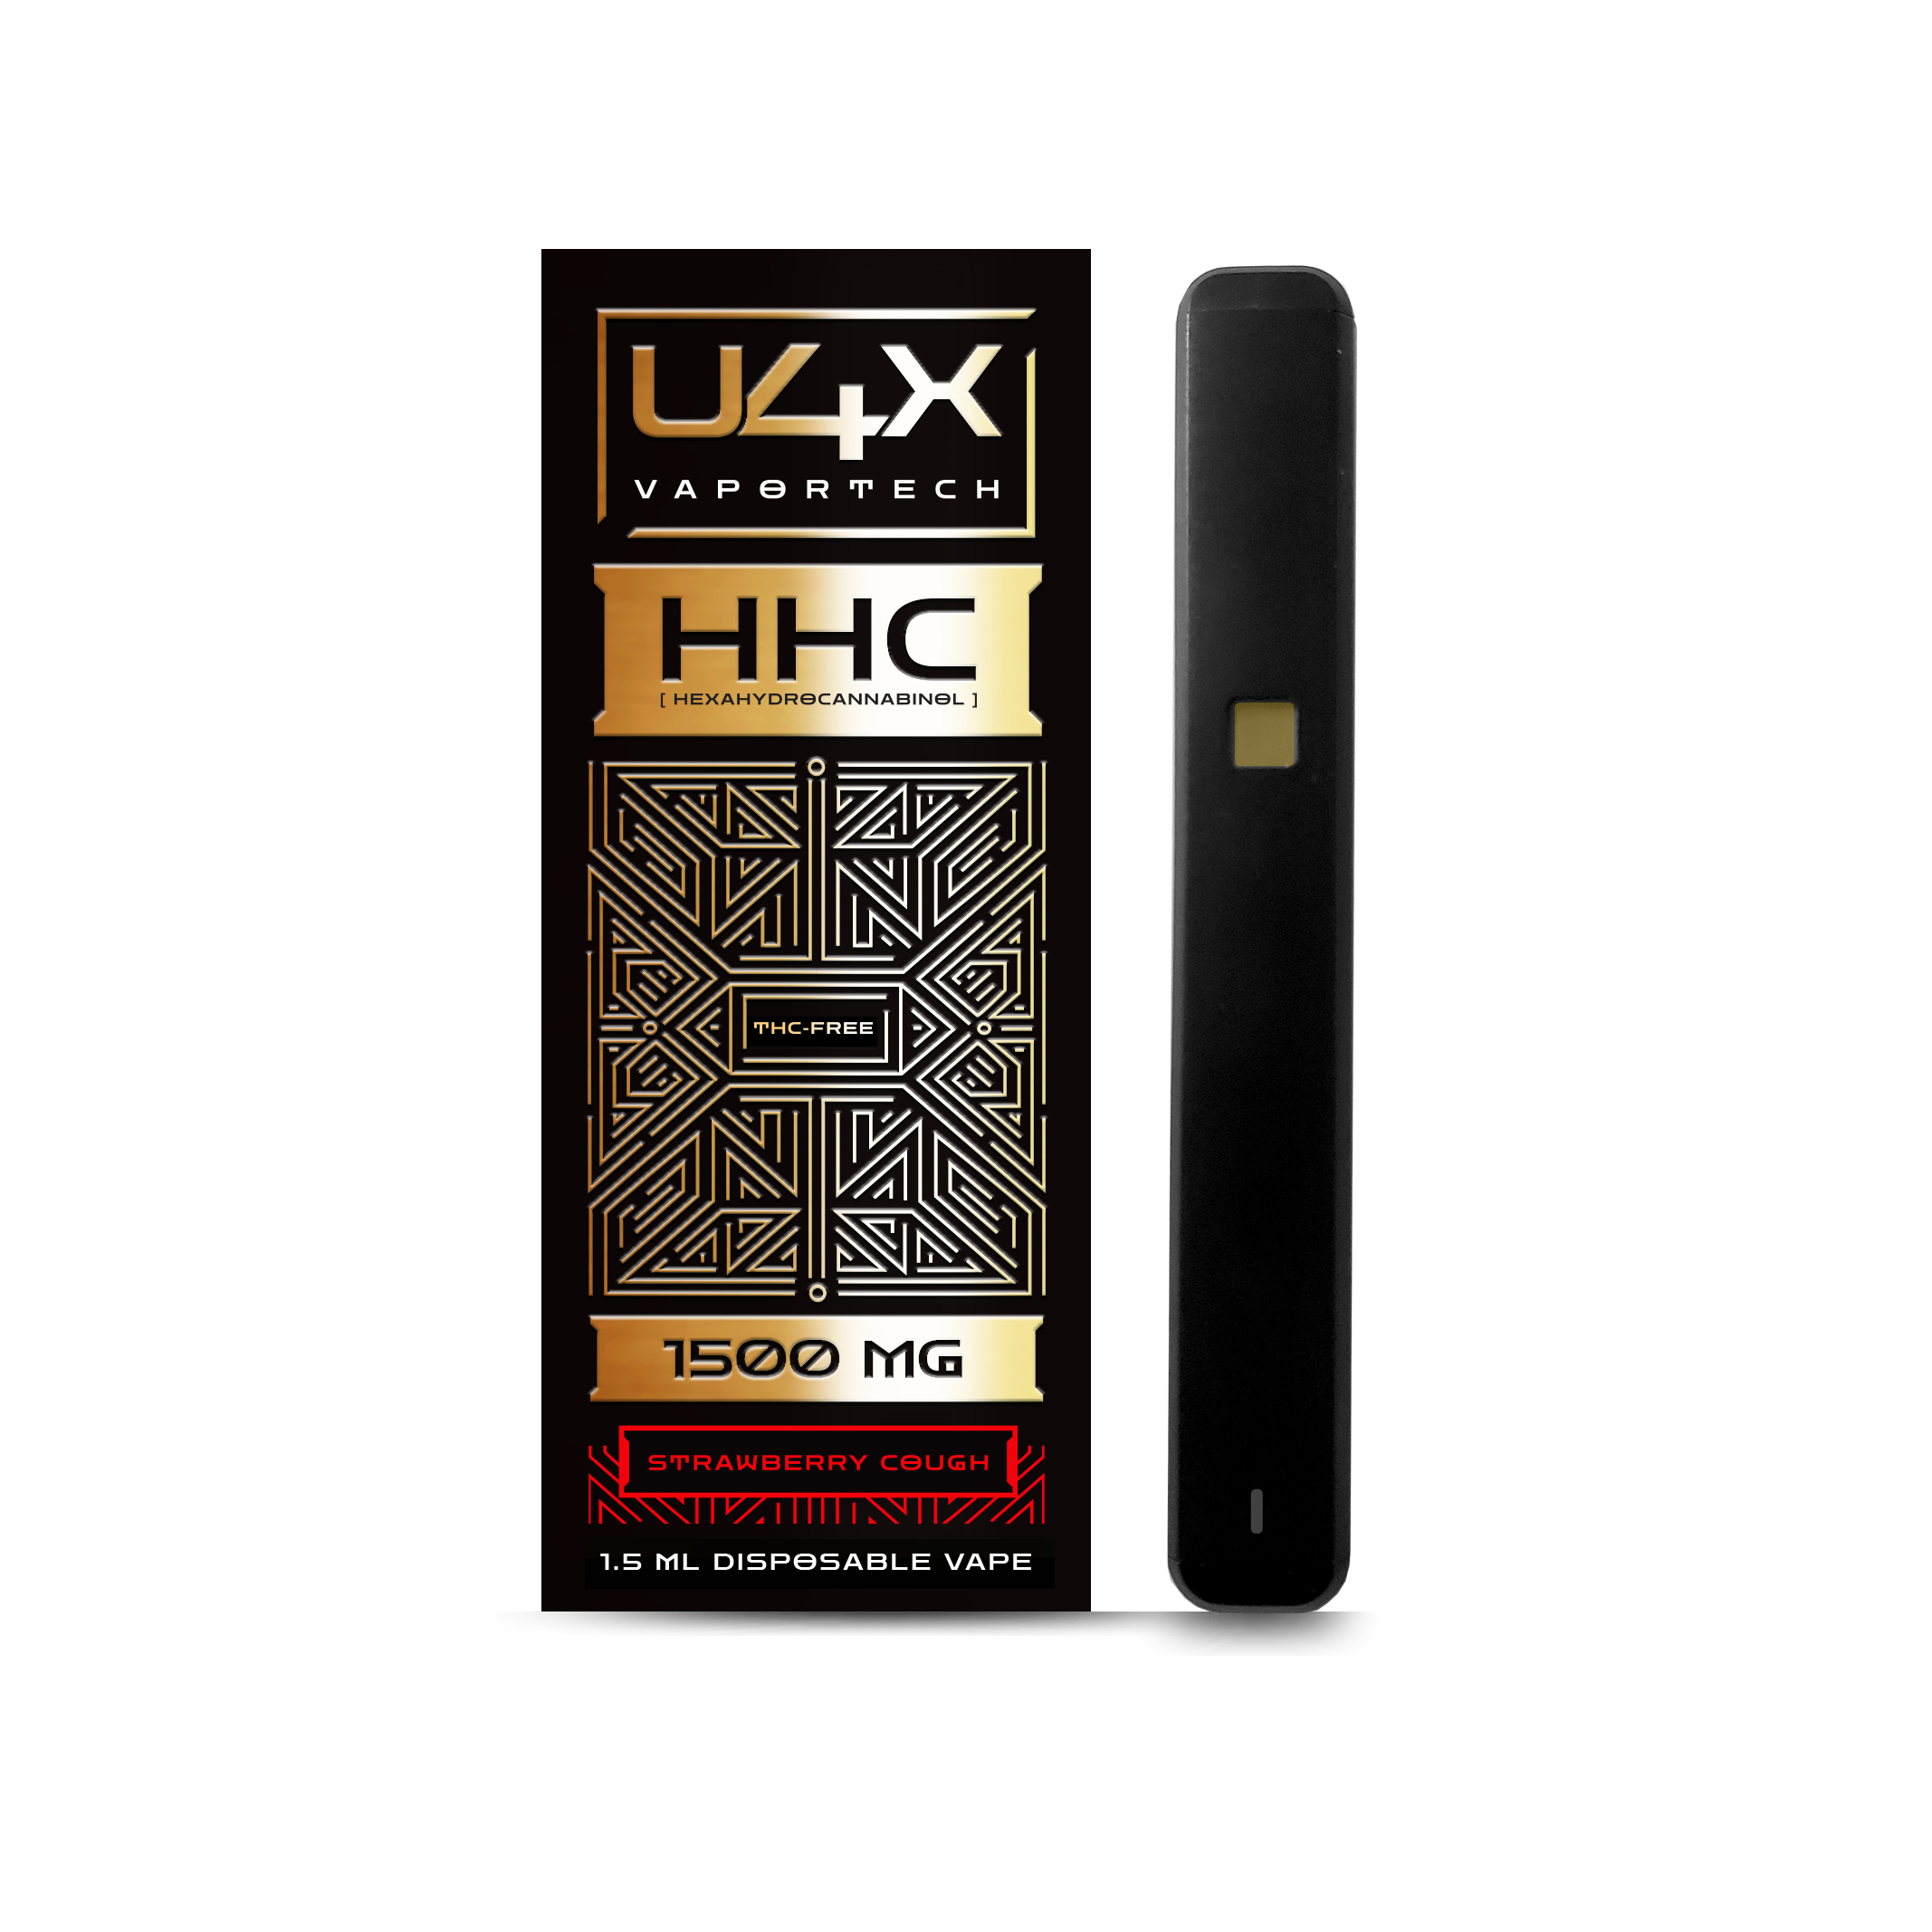 U4X Vaportech 1500 mg HHC Disposable Vape Pen - Strawberry Cough